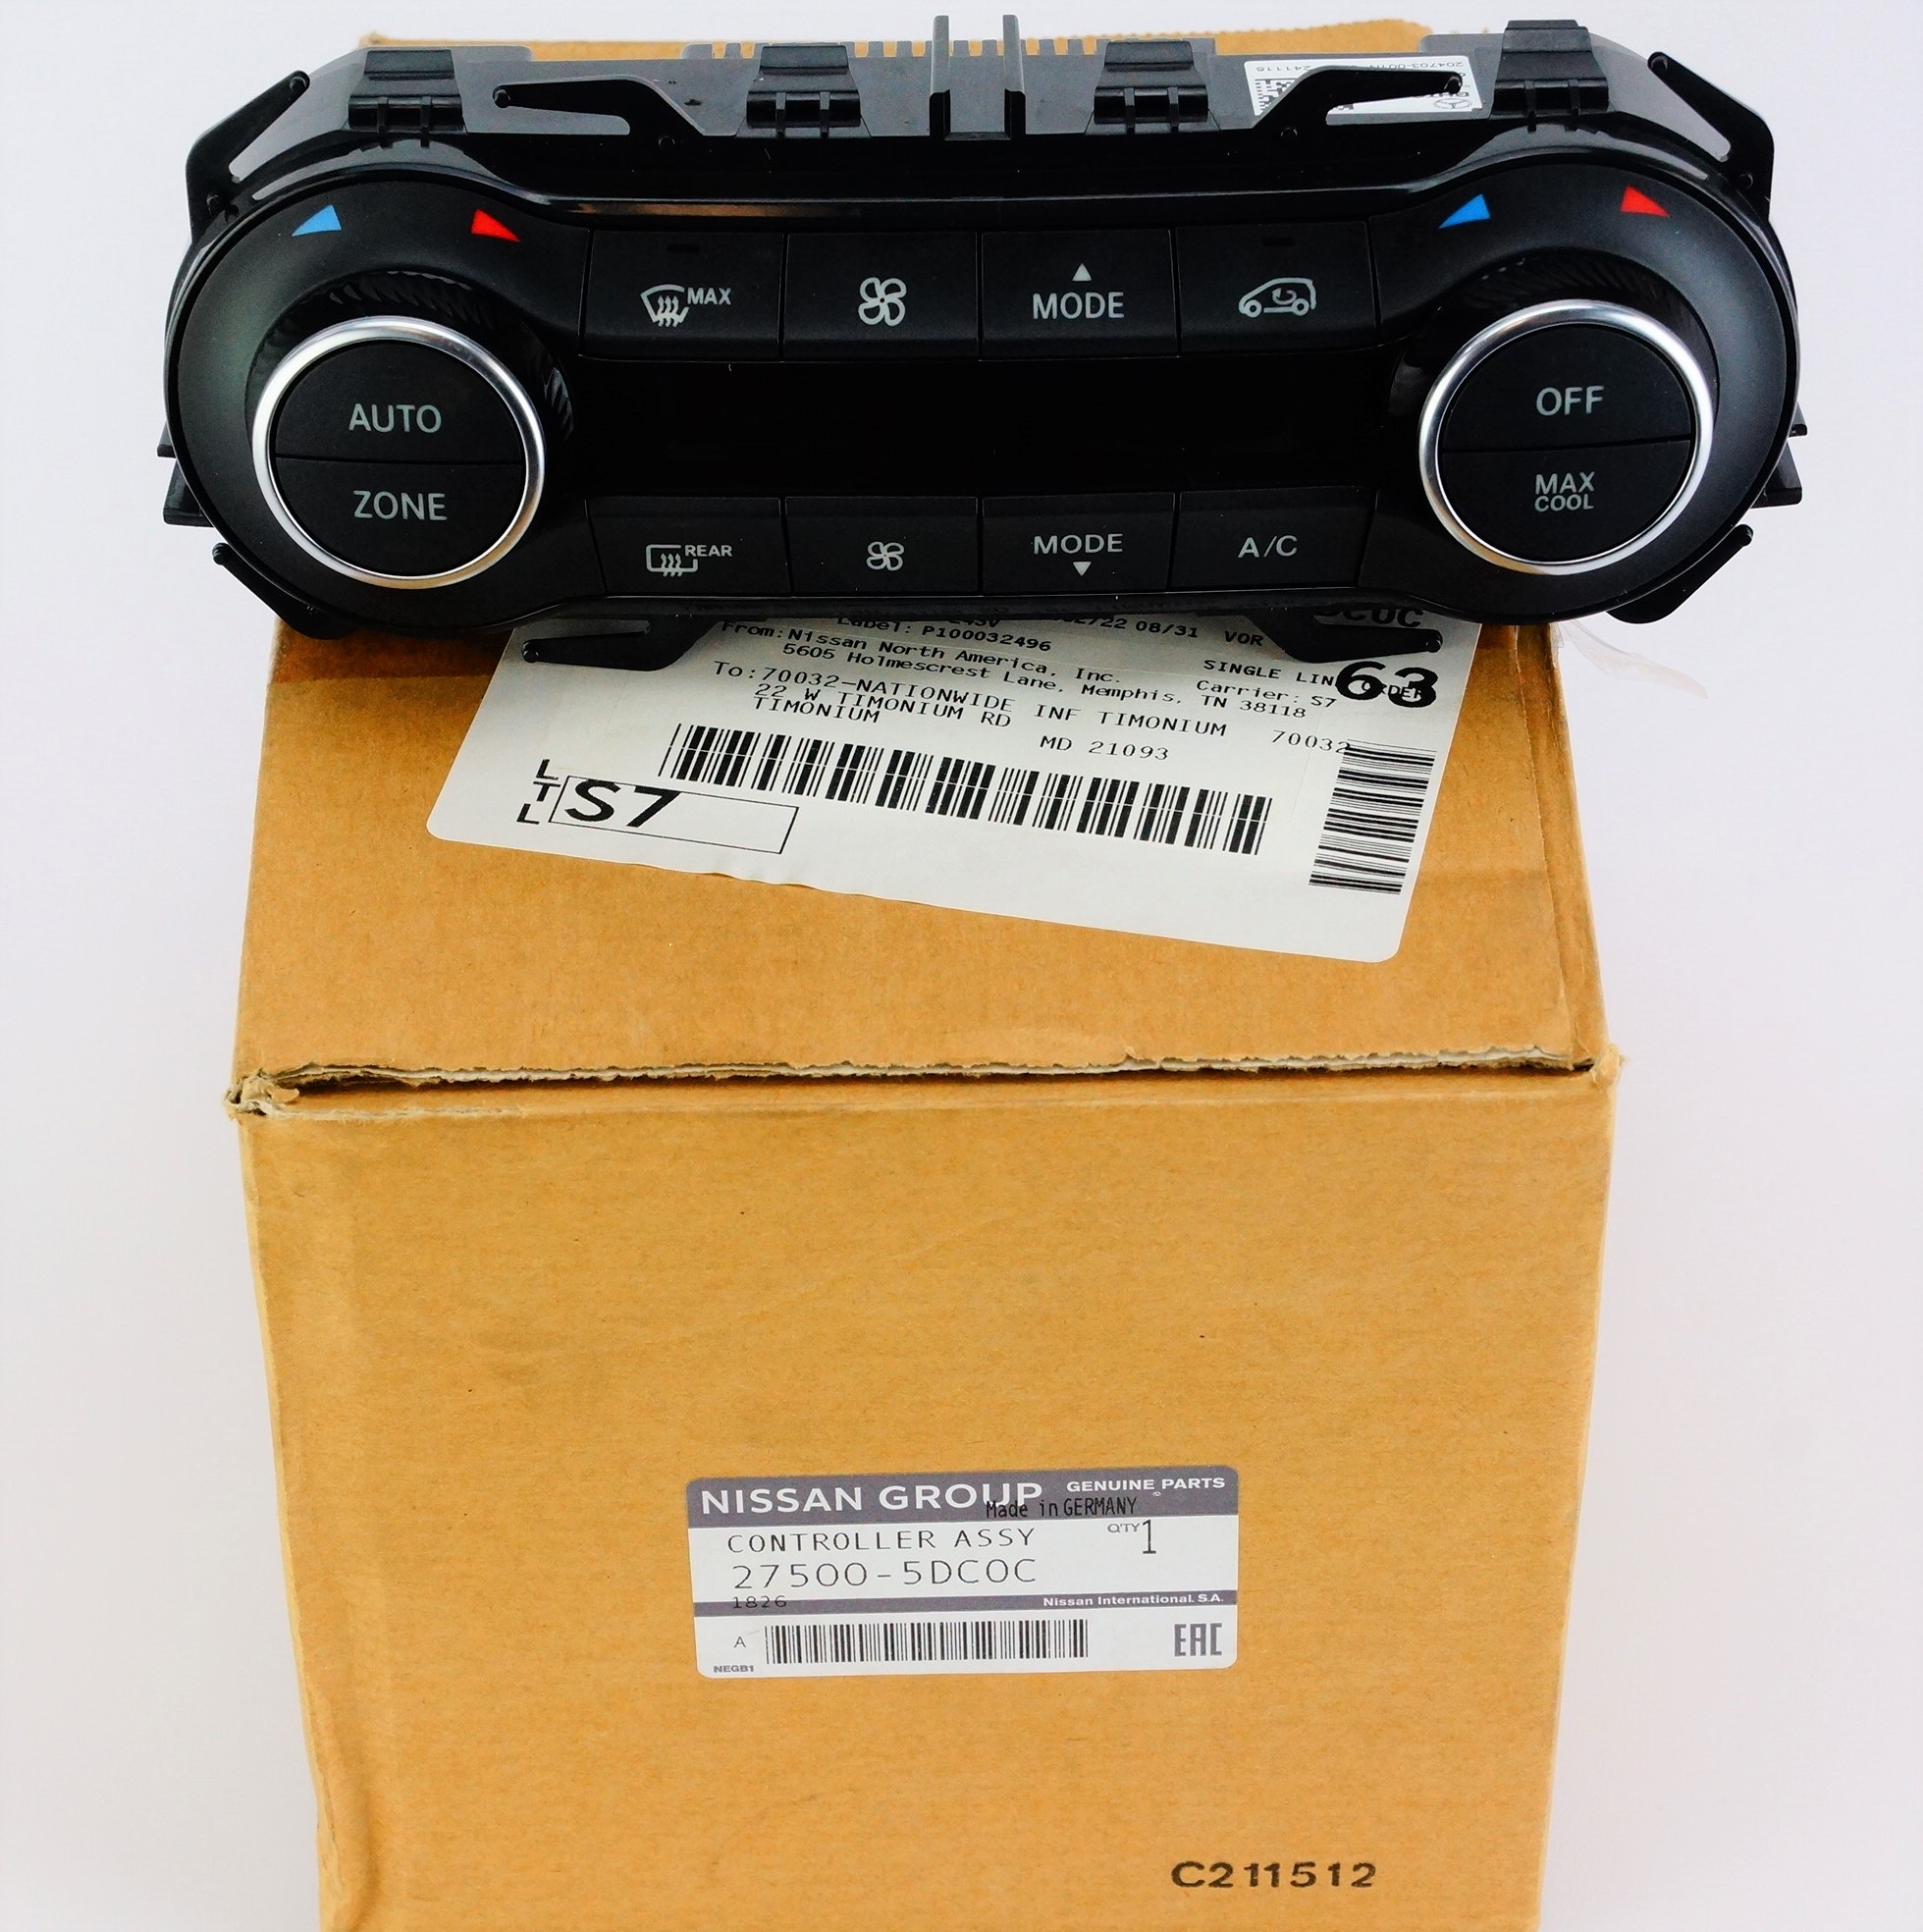 New Genuine OEM Nissan 27500-5DC0C HVAC Temp Control Panel Infiniti QX30 - image 1